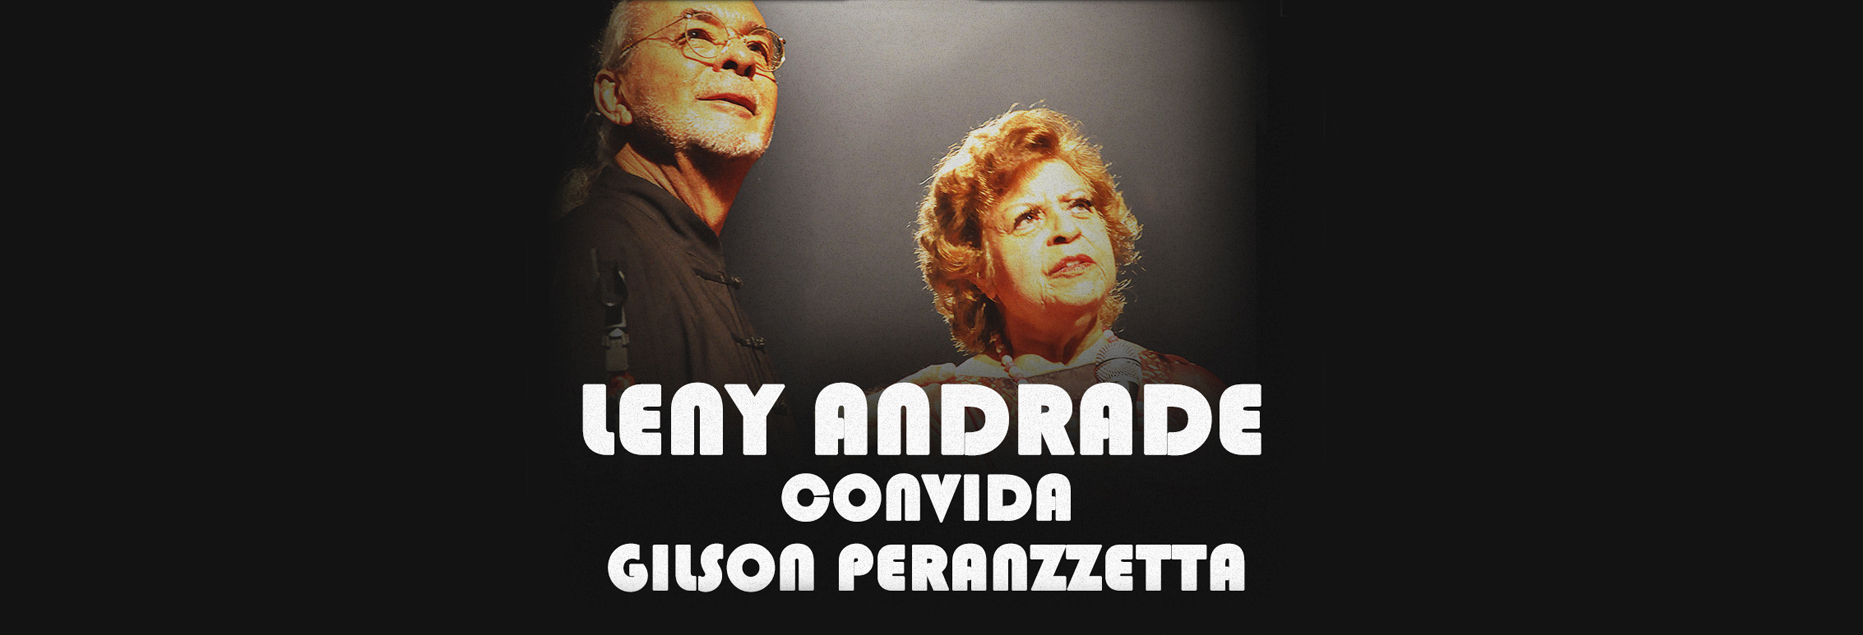 Leny Andrade e Gilson Peranzzetta